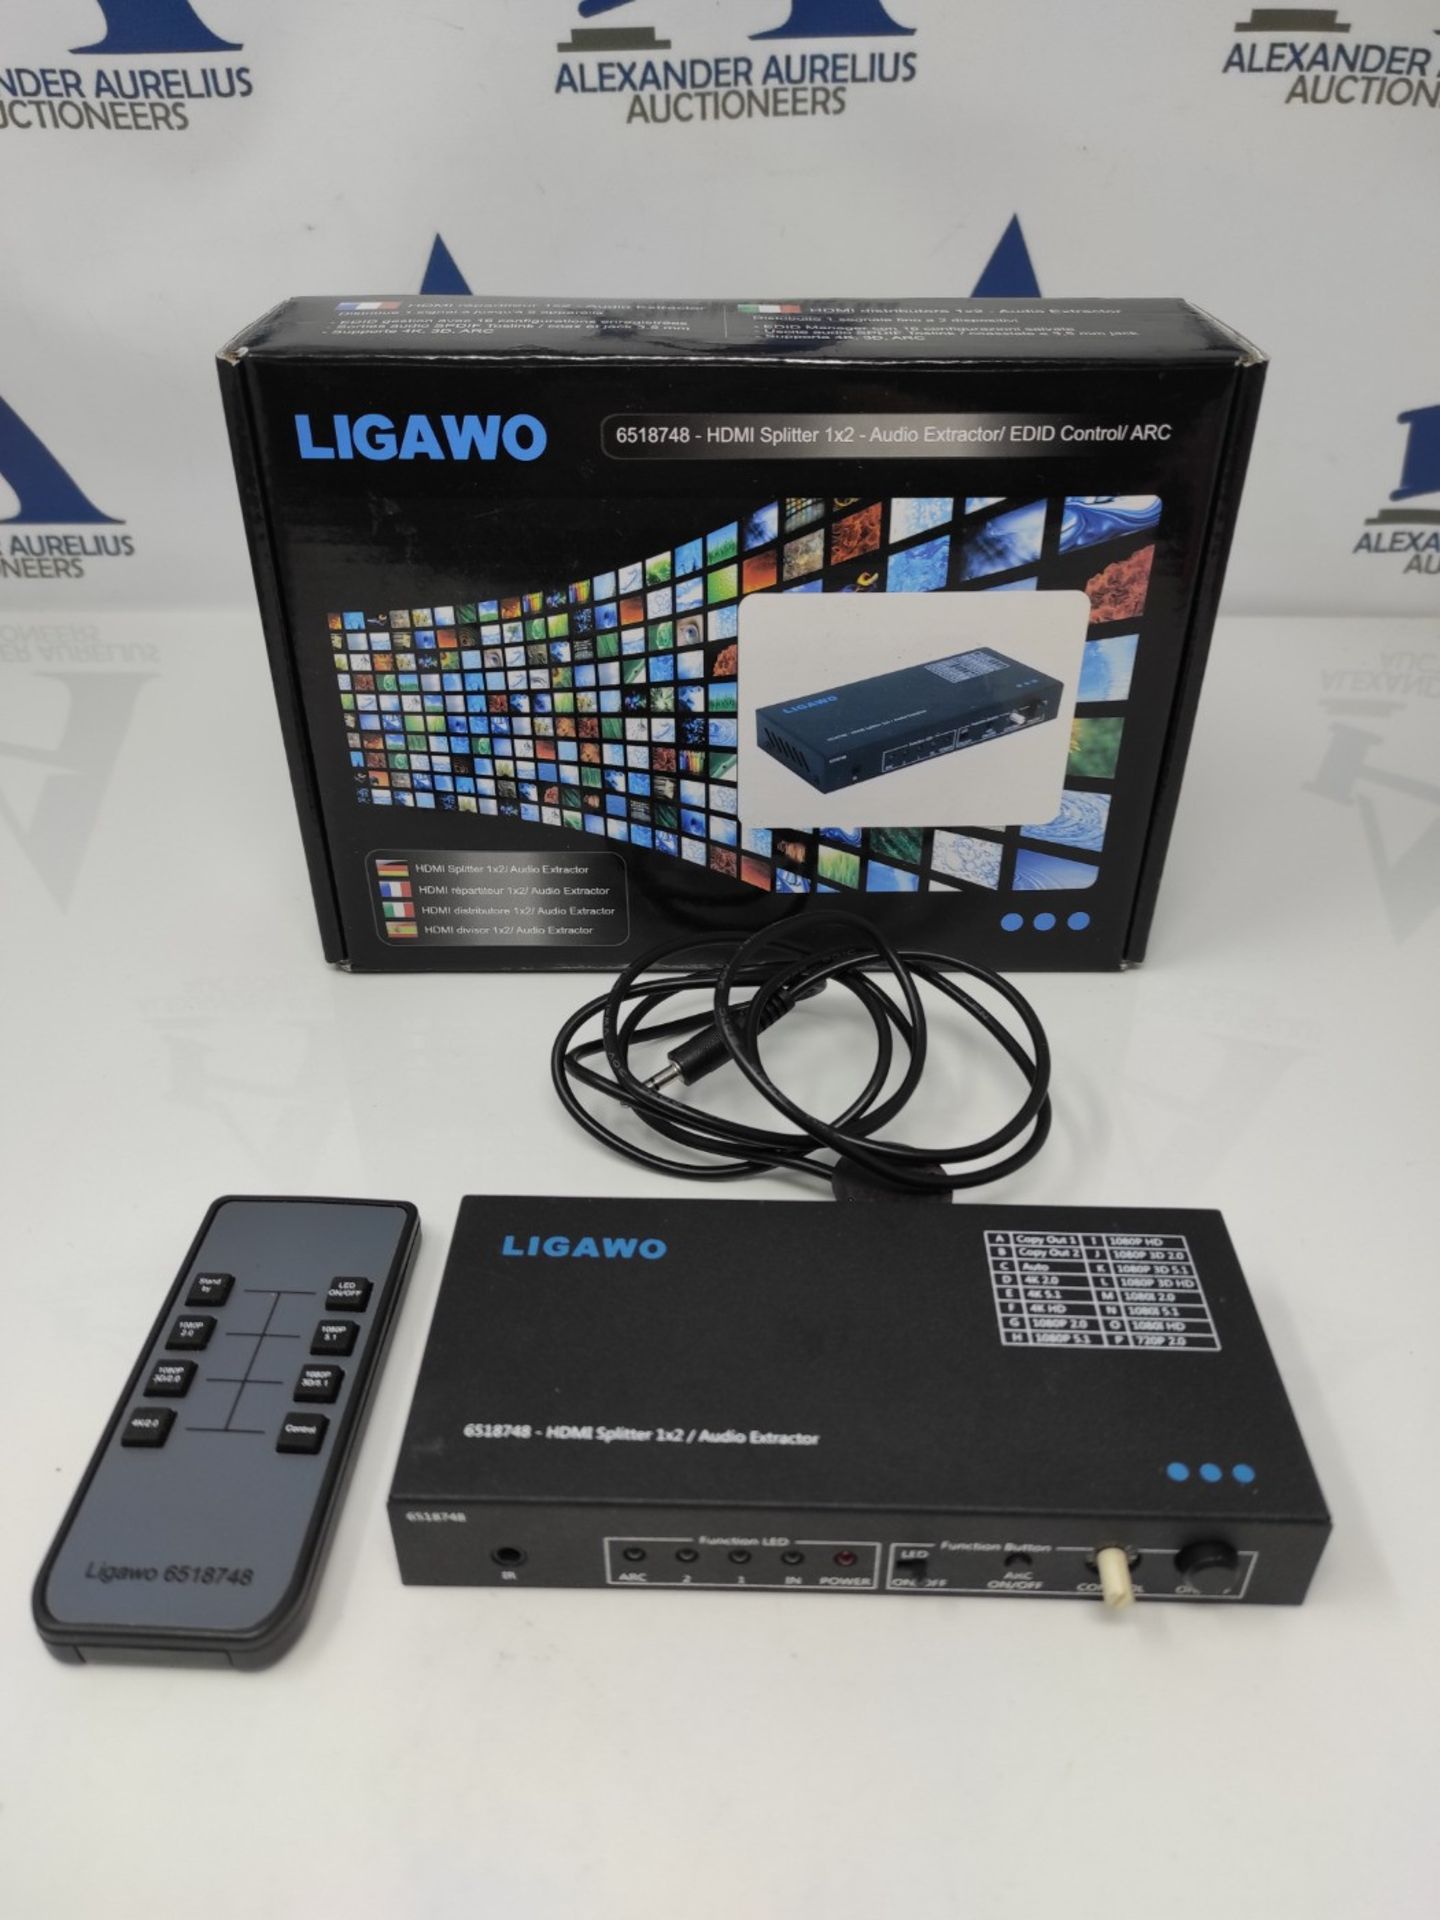 Ligawo 6518748 HDMI Splitter 1x2 Audio Extractor/EDID Control/ARC - Image 2 of 2